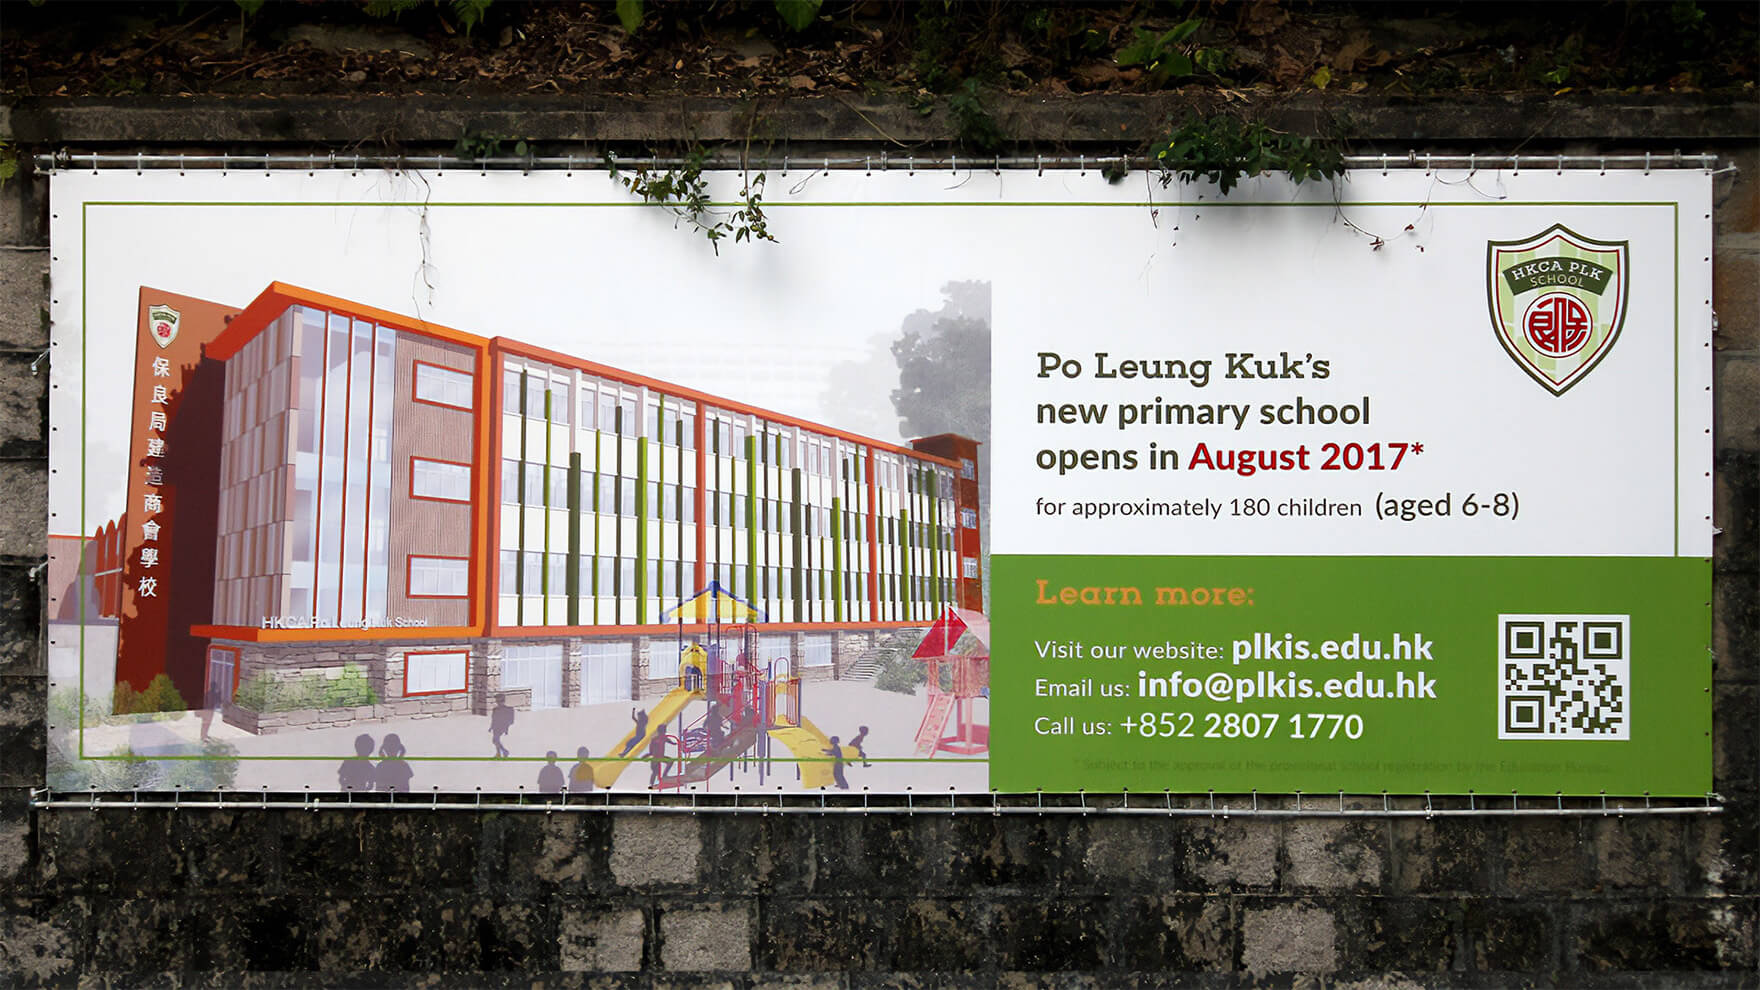 Branding Agency Hong Kong_HKCA Po Leung Kuk School_Design for schools_CheddarMedia_3_1760